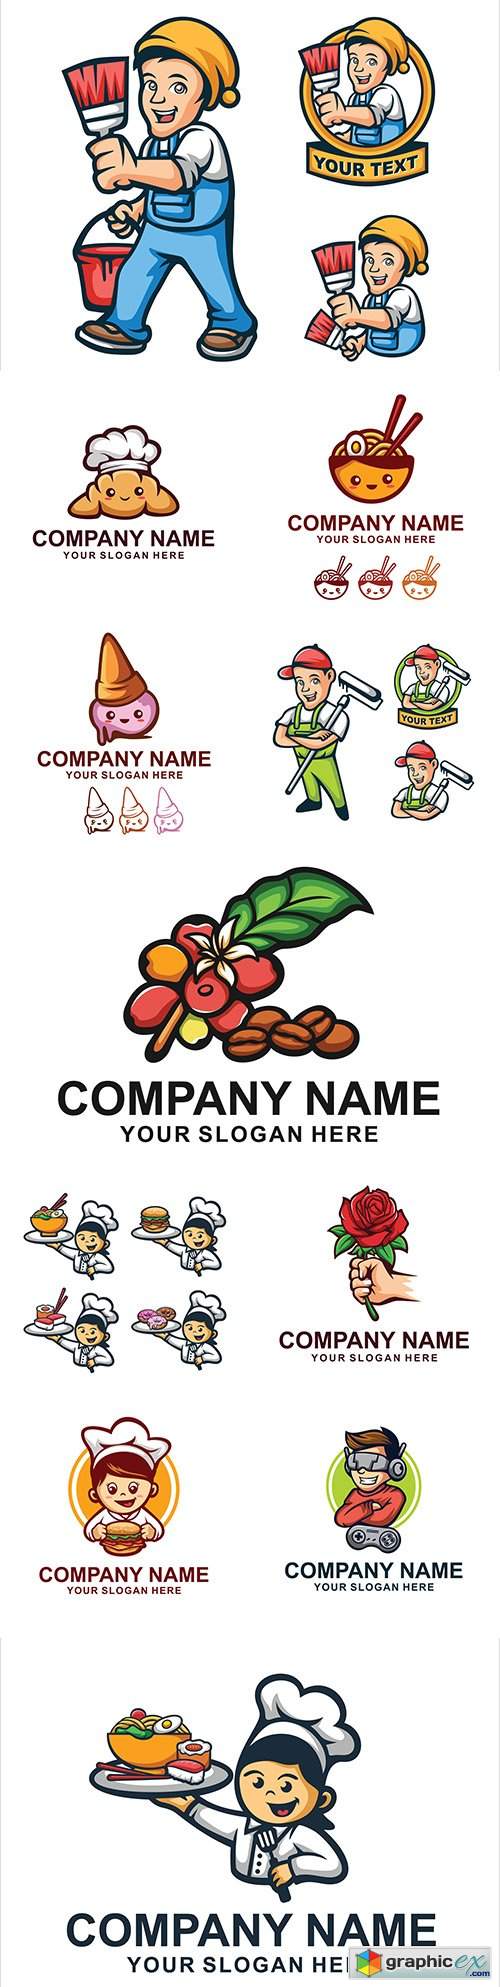  Brand name company business corporate logos design 28 